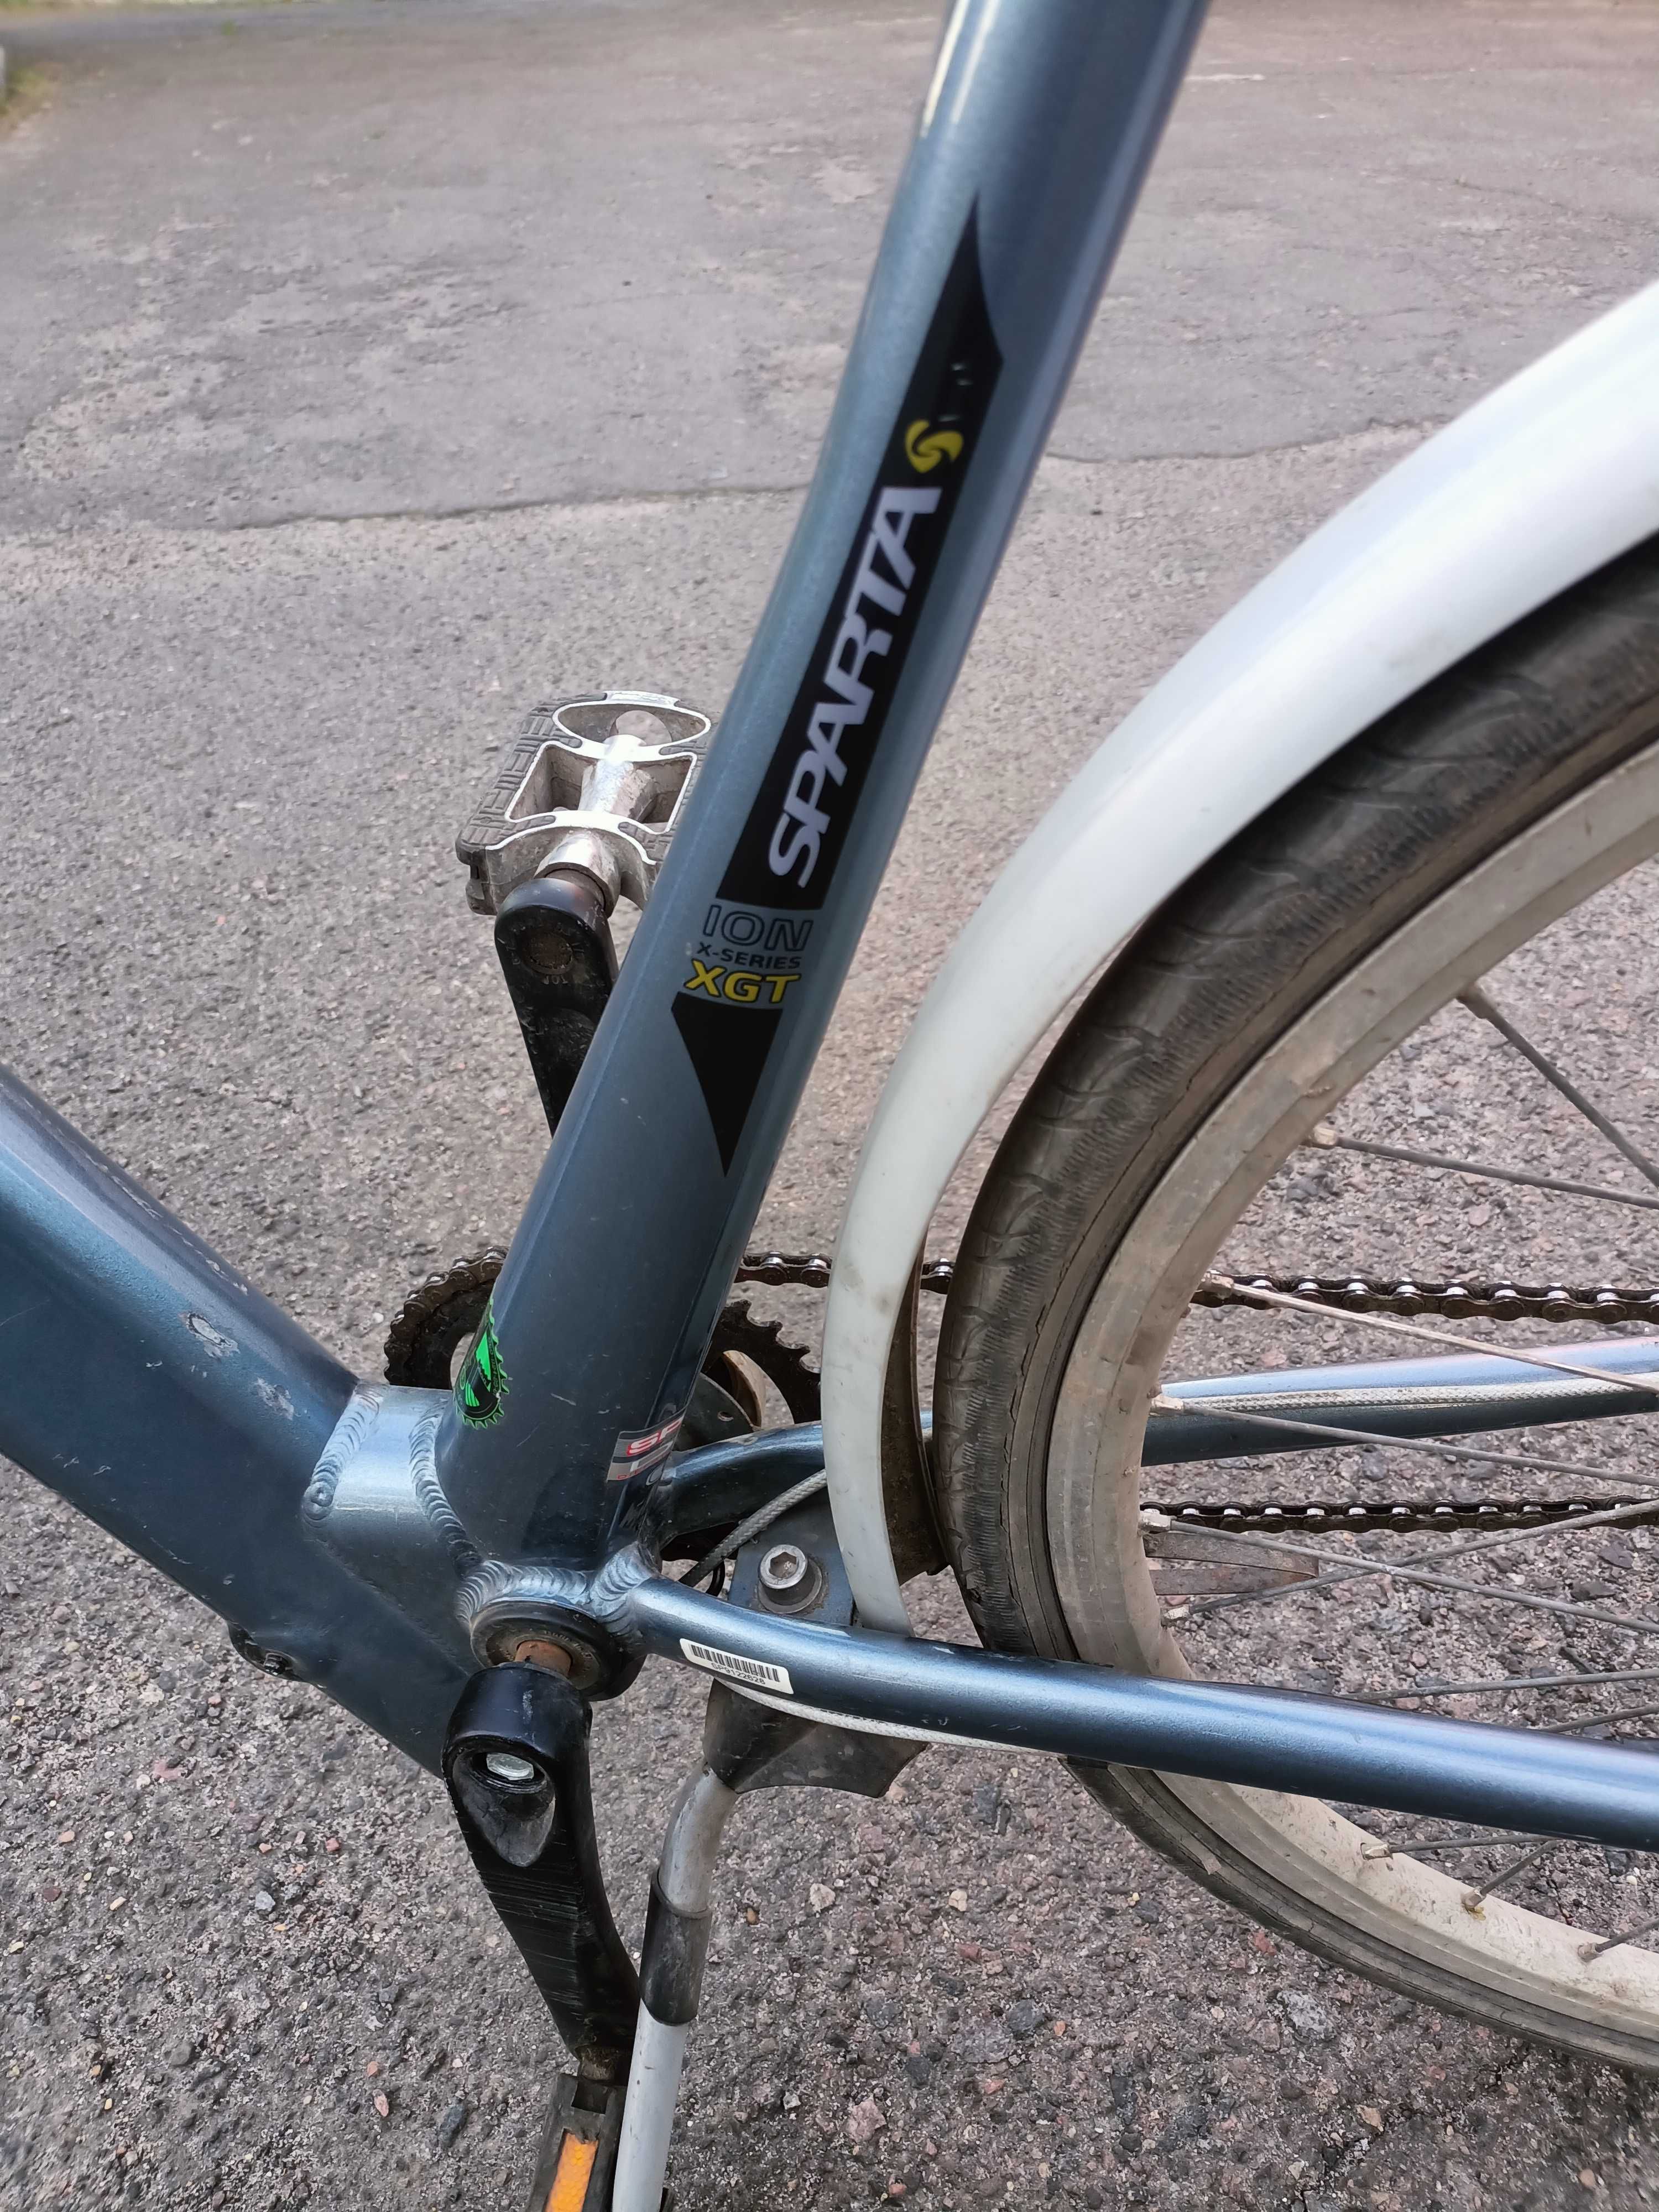 Електровелосипед Sparta